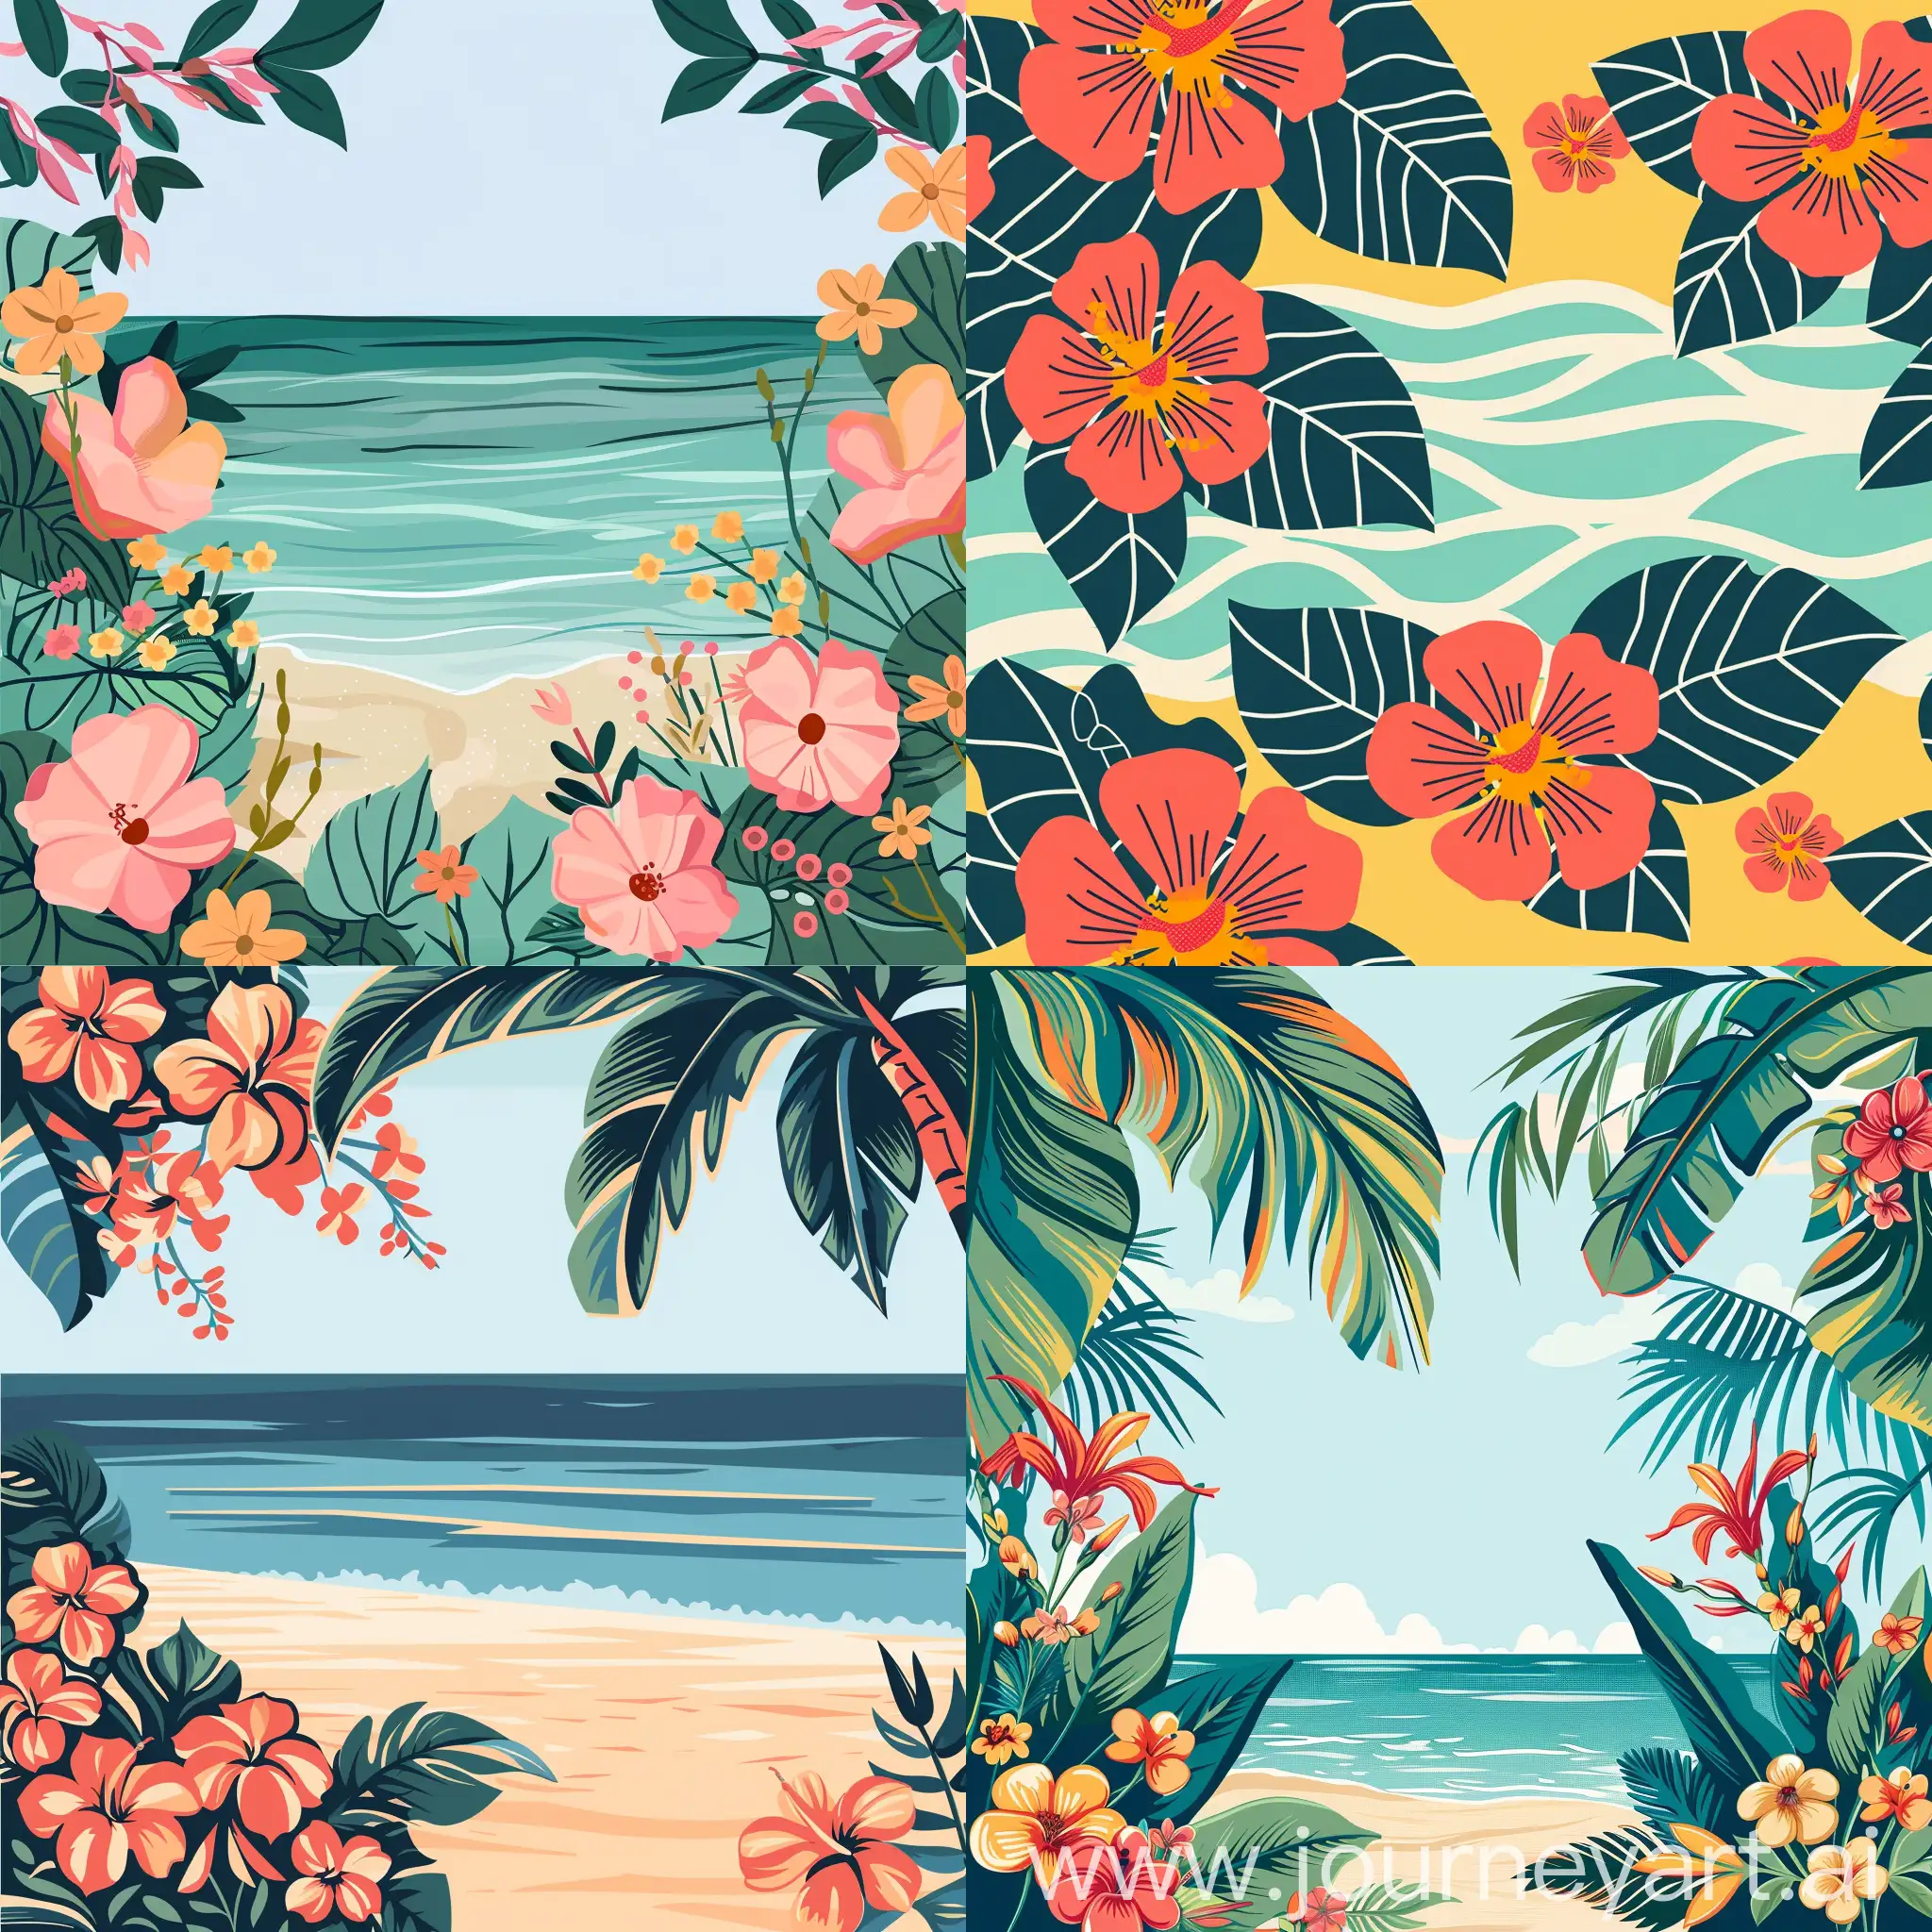 Digital product, floral-patterned, 32 Bit Pixel Art, Pop Art, clean lines, icon, vector, svg, beach background